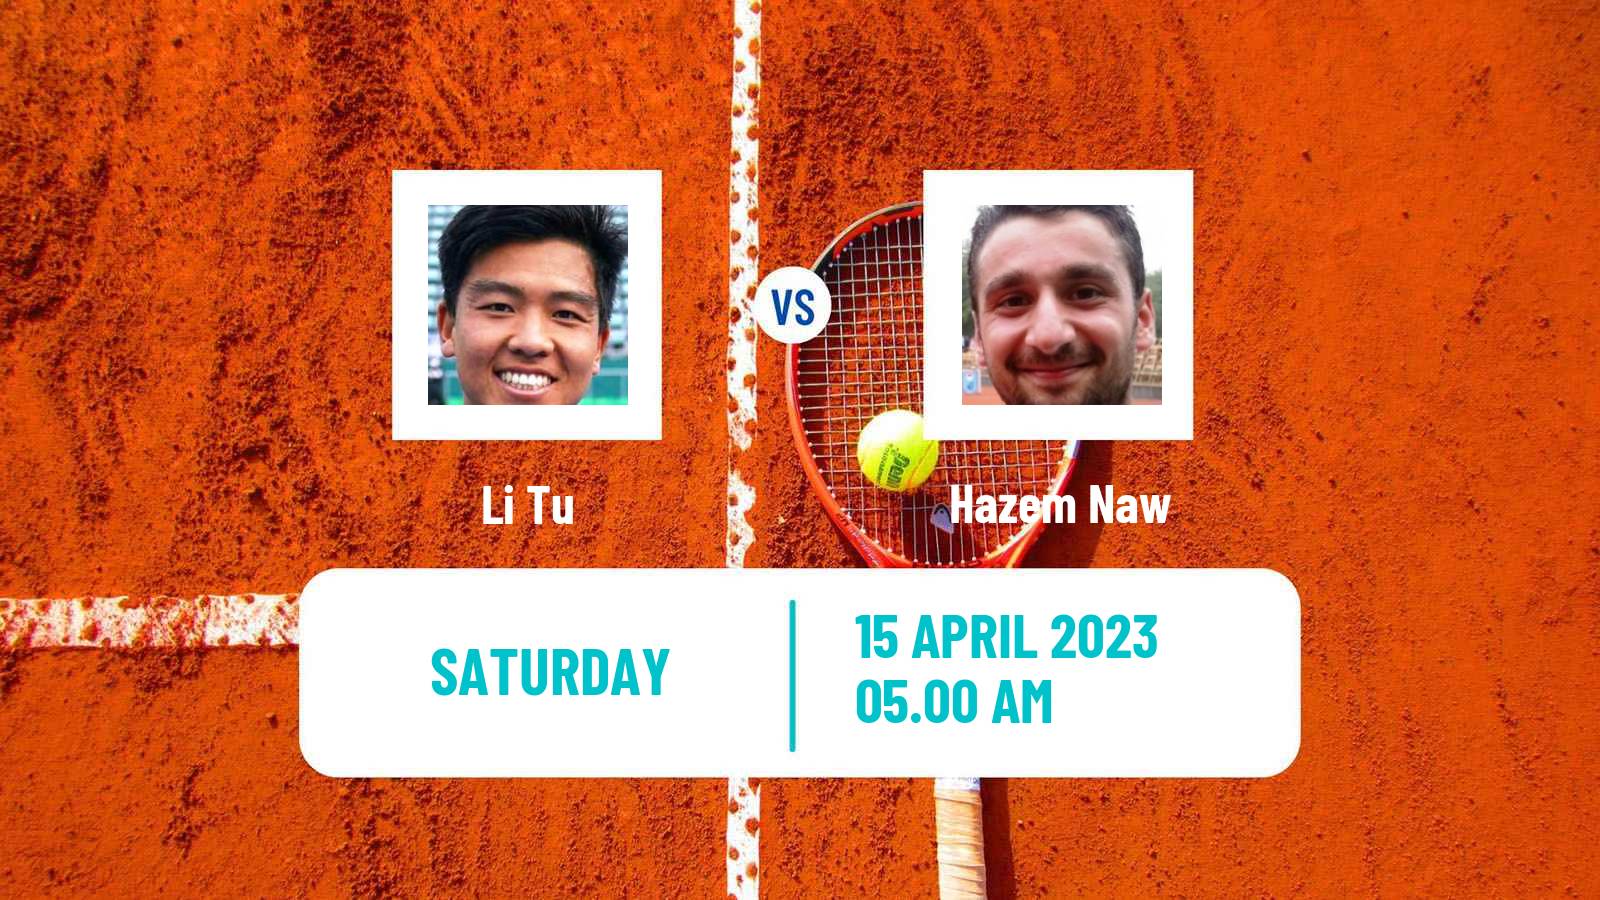 Tennis ITF Tournaments Li Tu - Hazem Naw